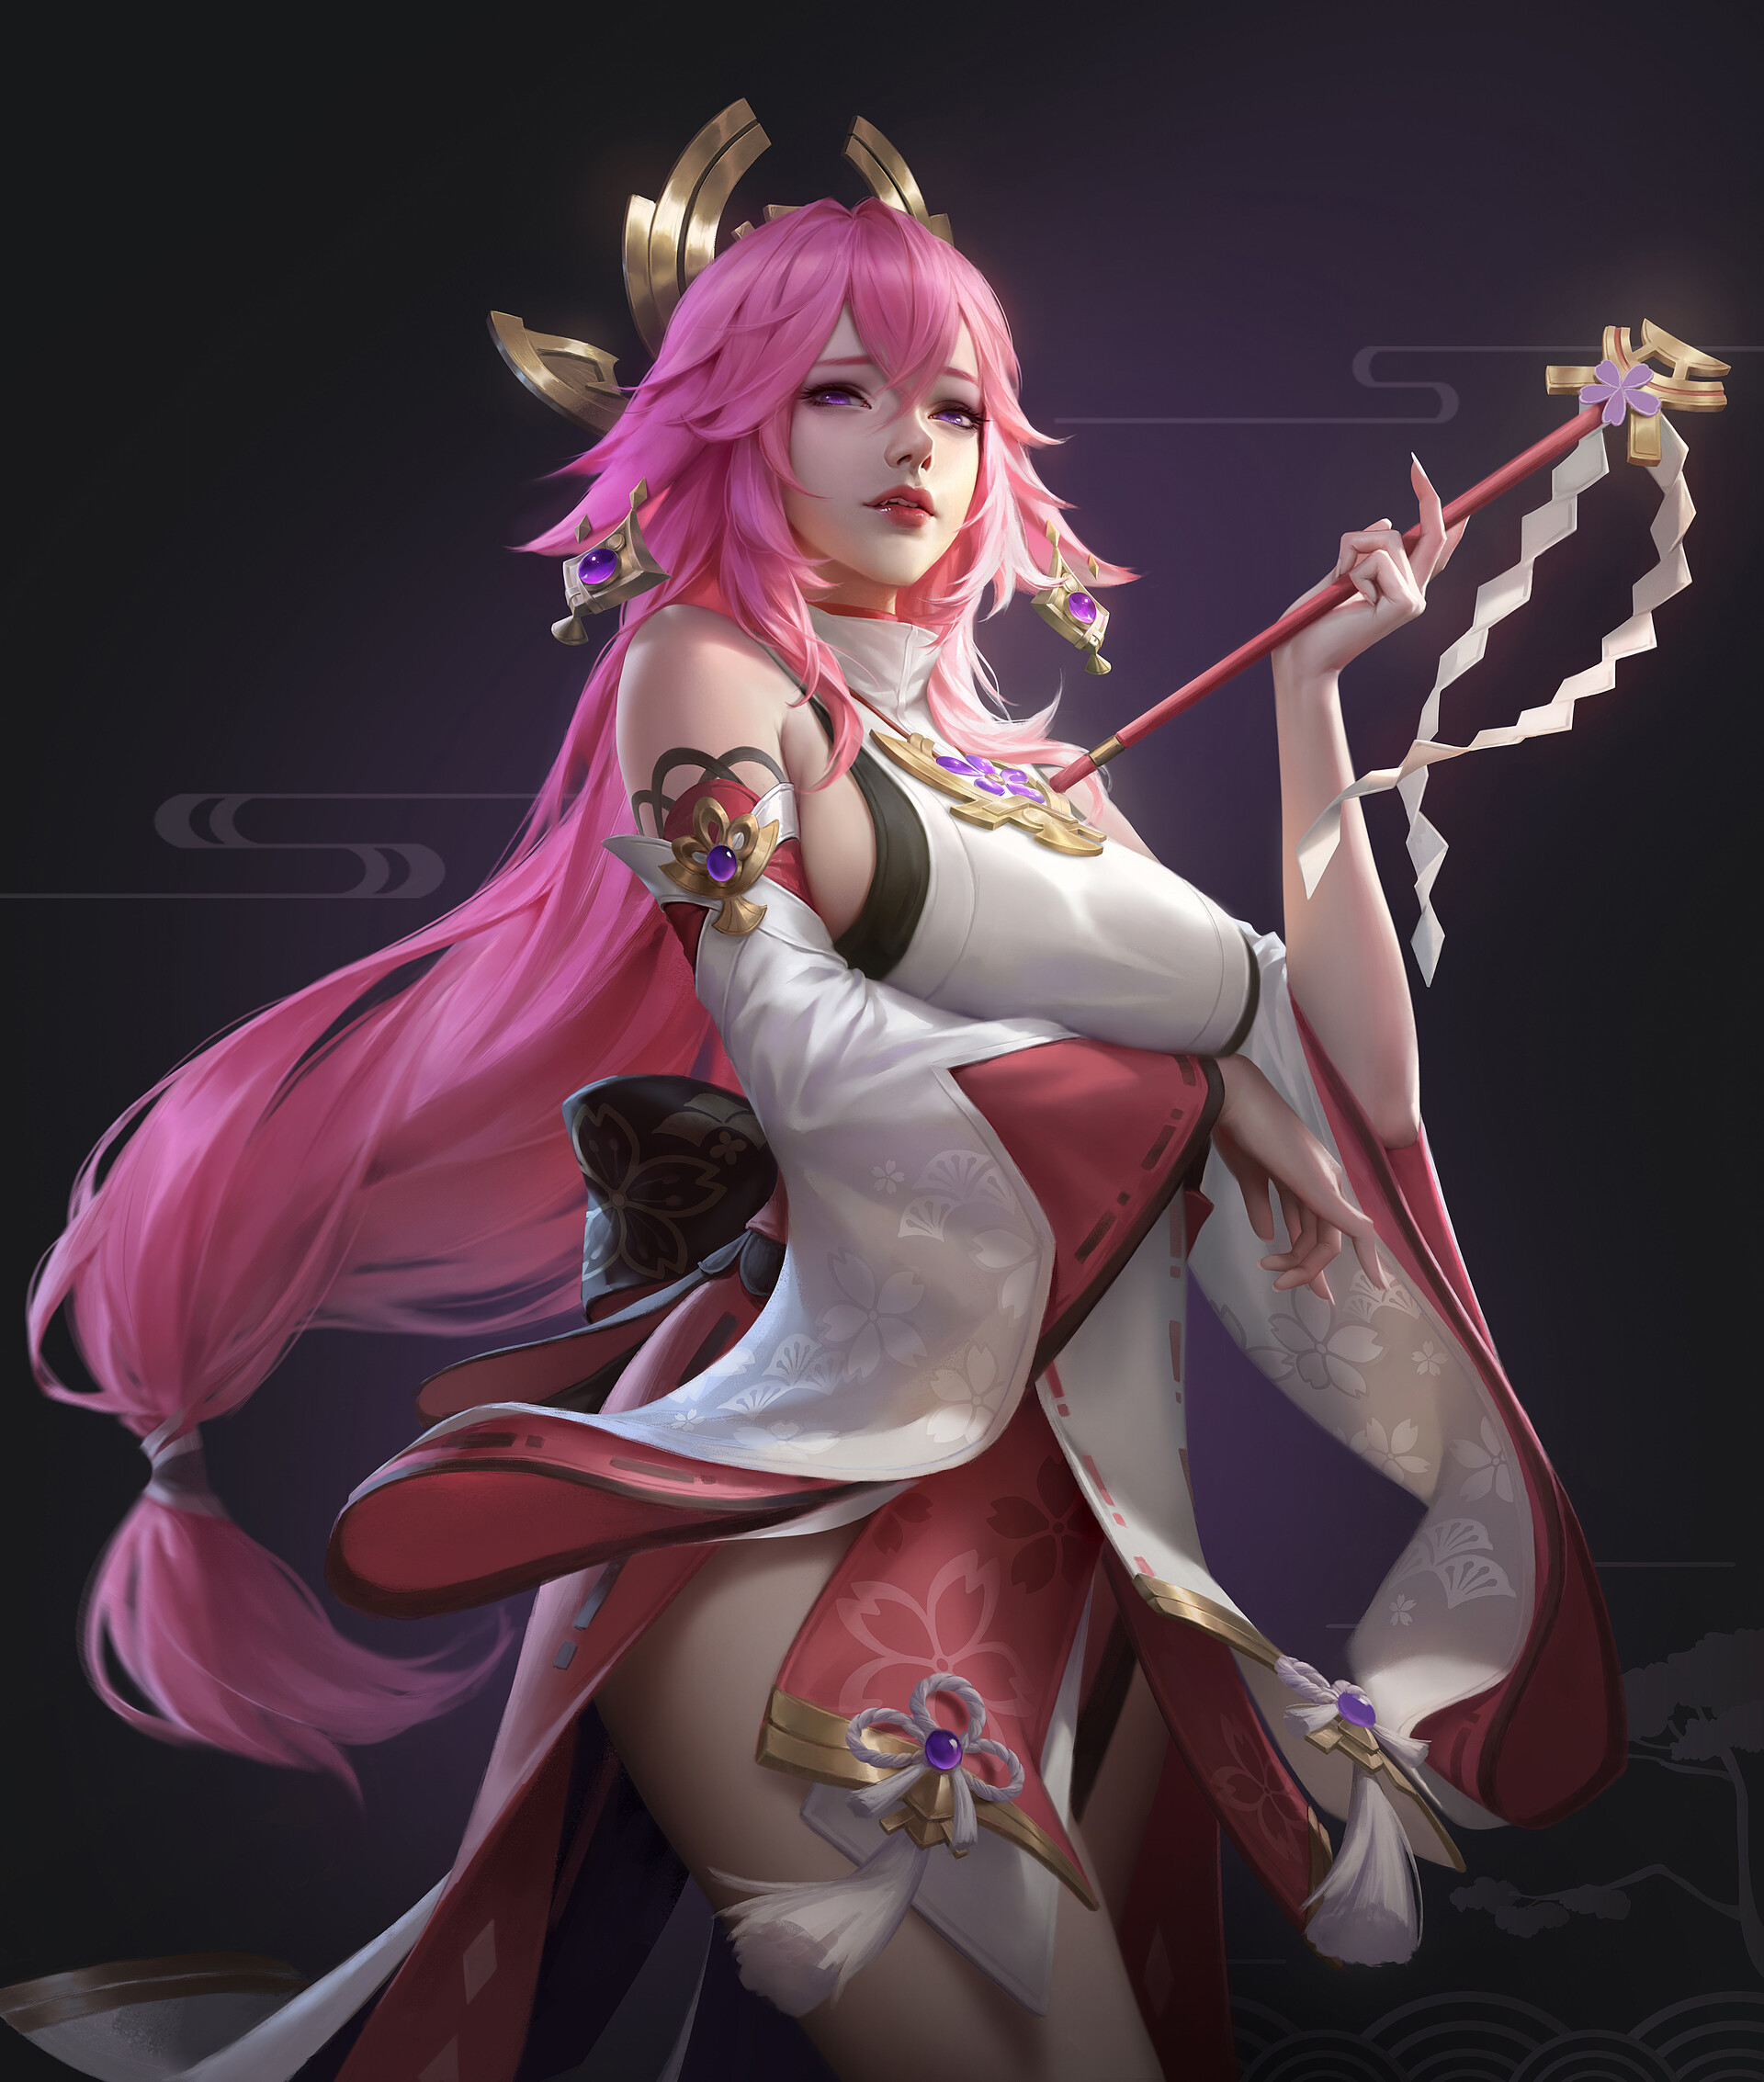 Digital Art Artwork Illustration Fan Art Video Game Art Women Video Game Characters Pink Hair Long H 1920x2266